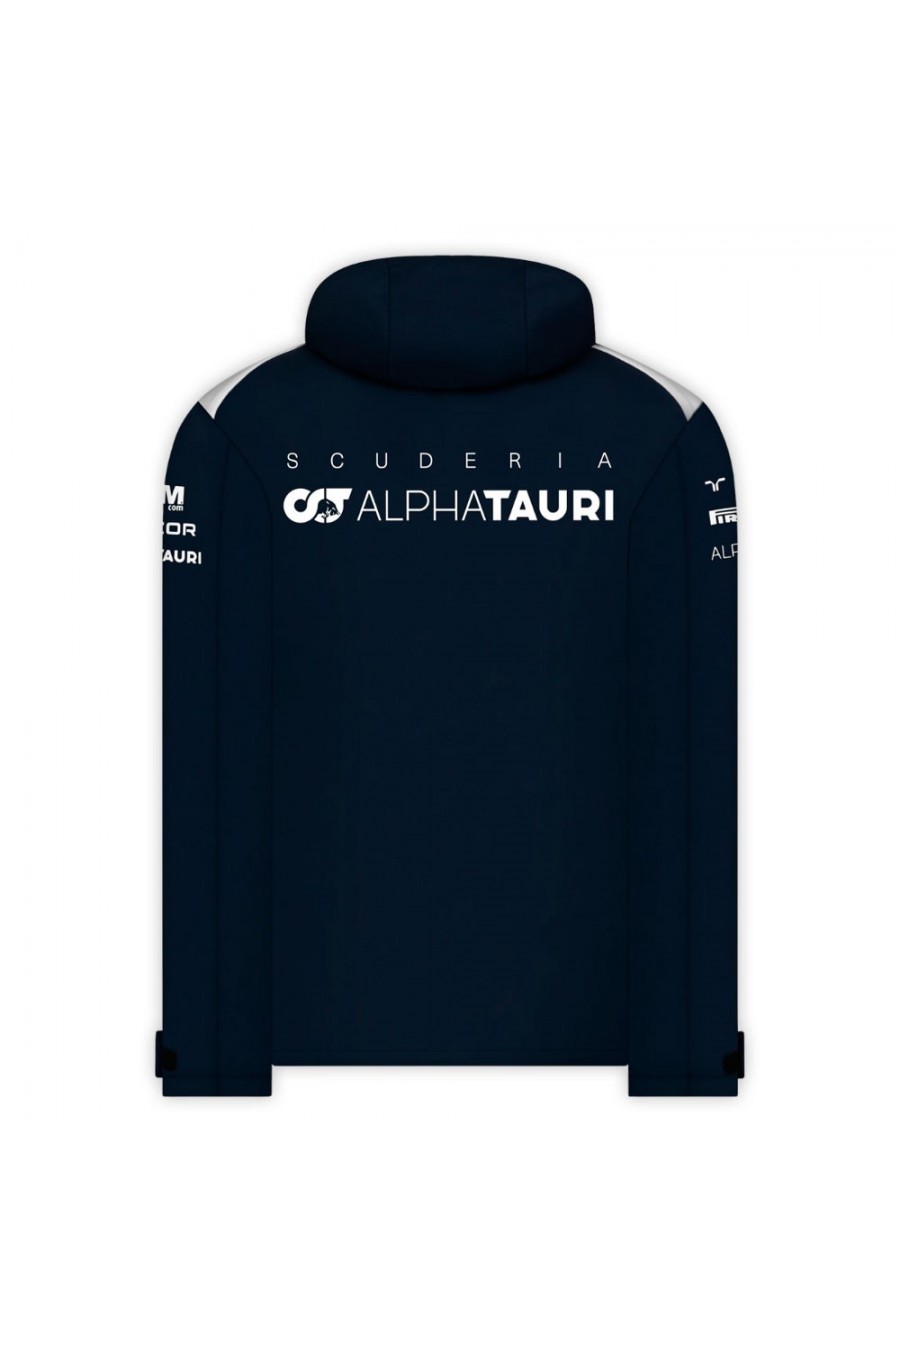 Scuderia AlphaTauri F1 2022 Softshell-Jacke